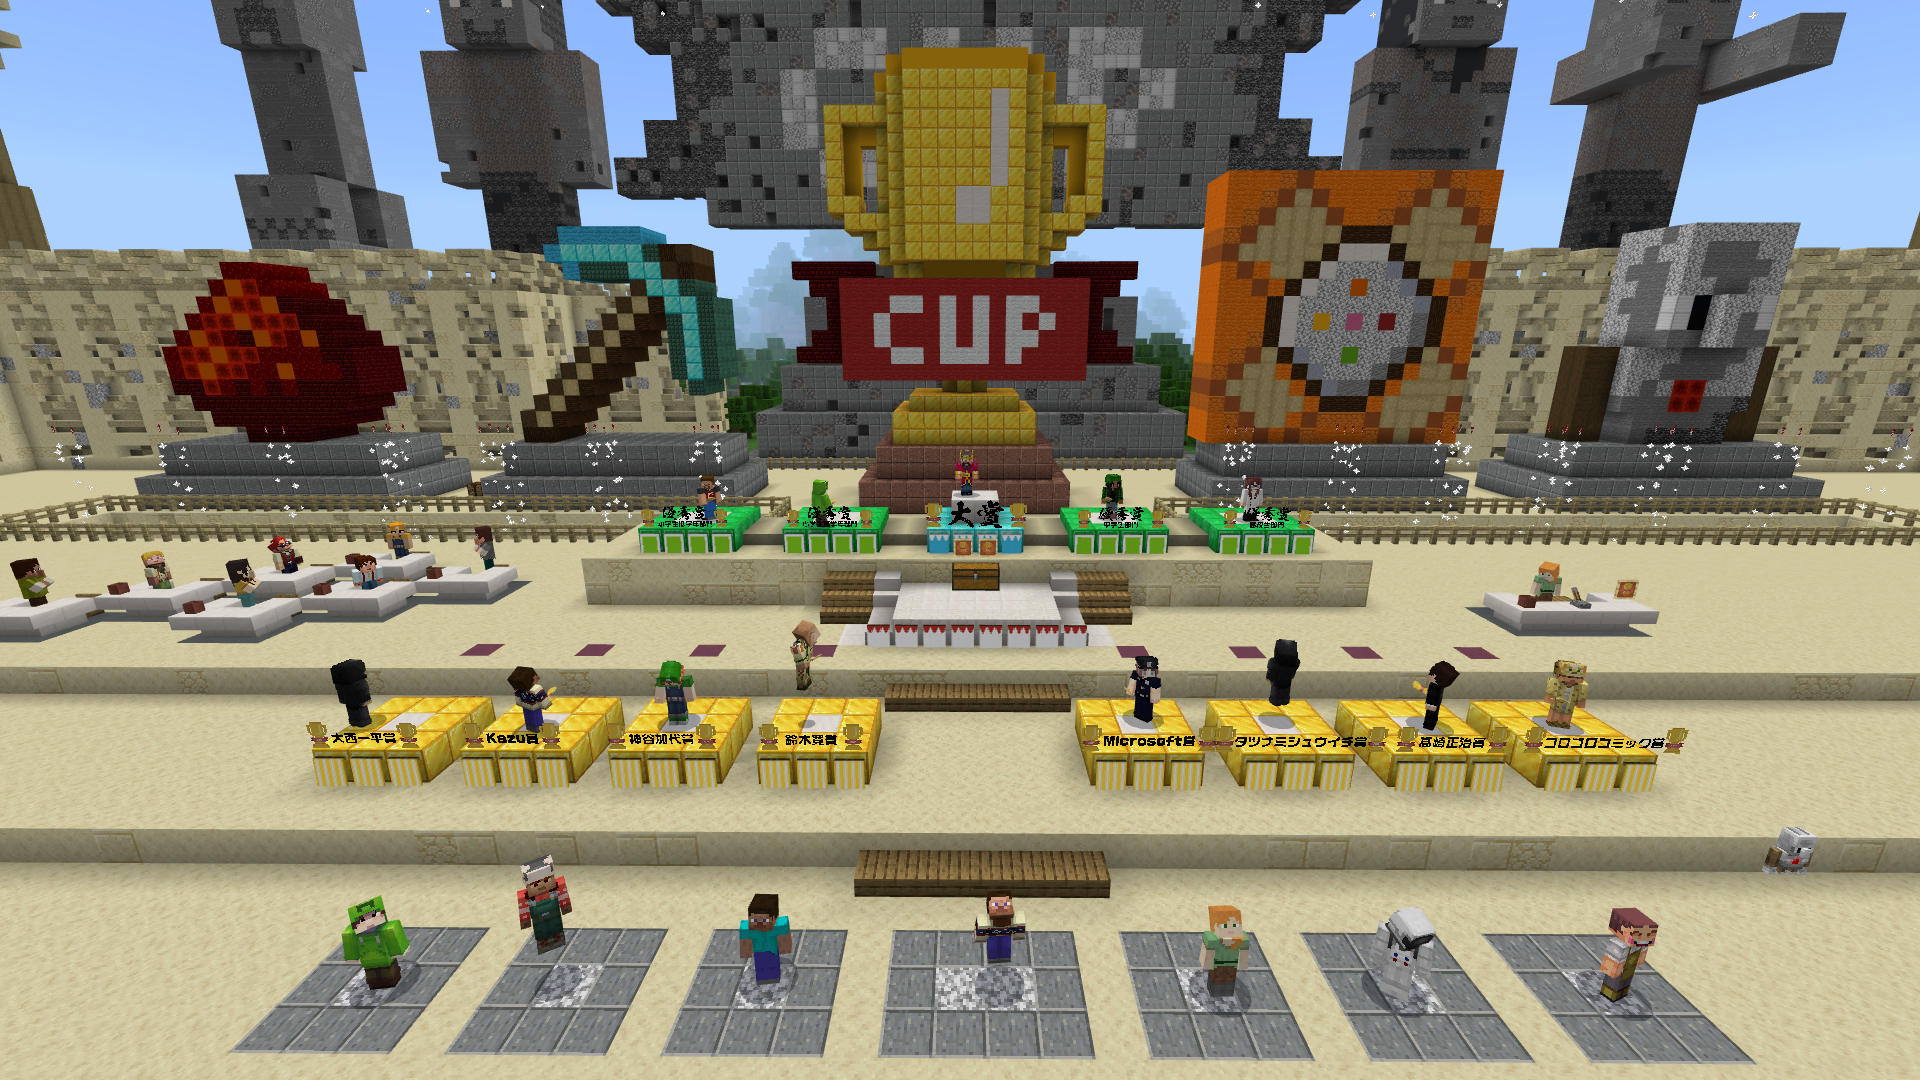 Minecraftカップ全国大会 未来の学校 をマイクラ上で発表 全13作品のawardが決定 Minecraftカップ 全国大会運営委員会のプレスリリース